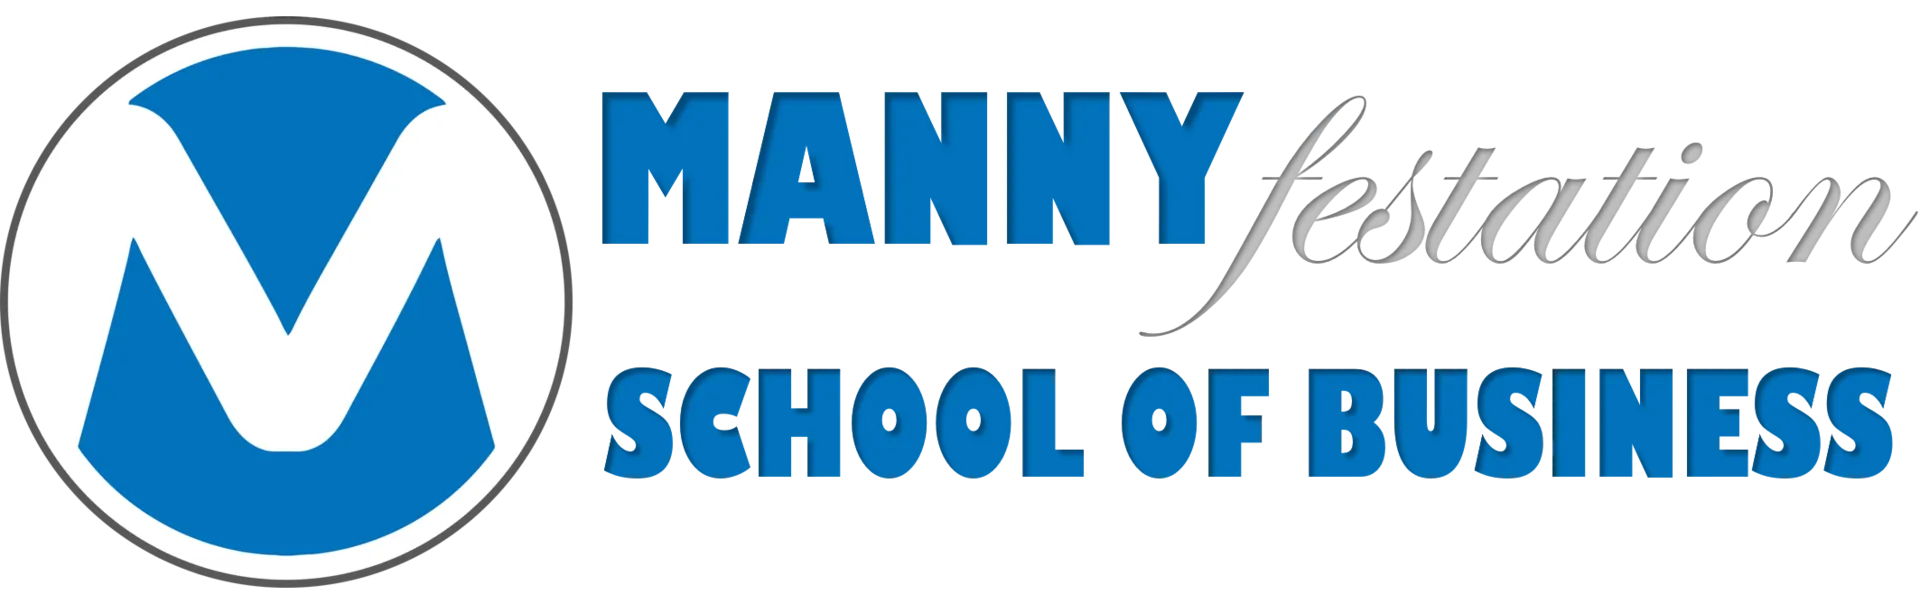 MANNYfestation: SCHOOL OF BUSINESS